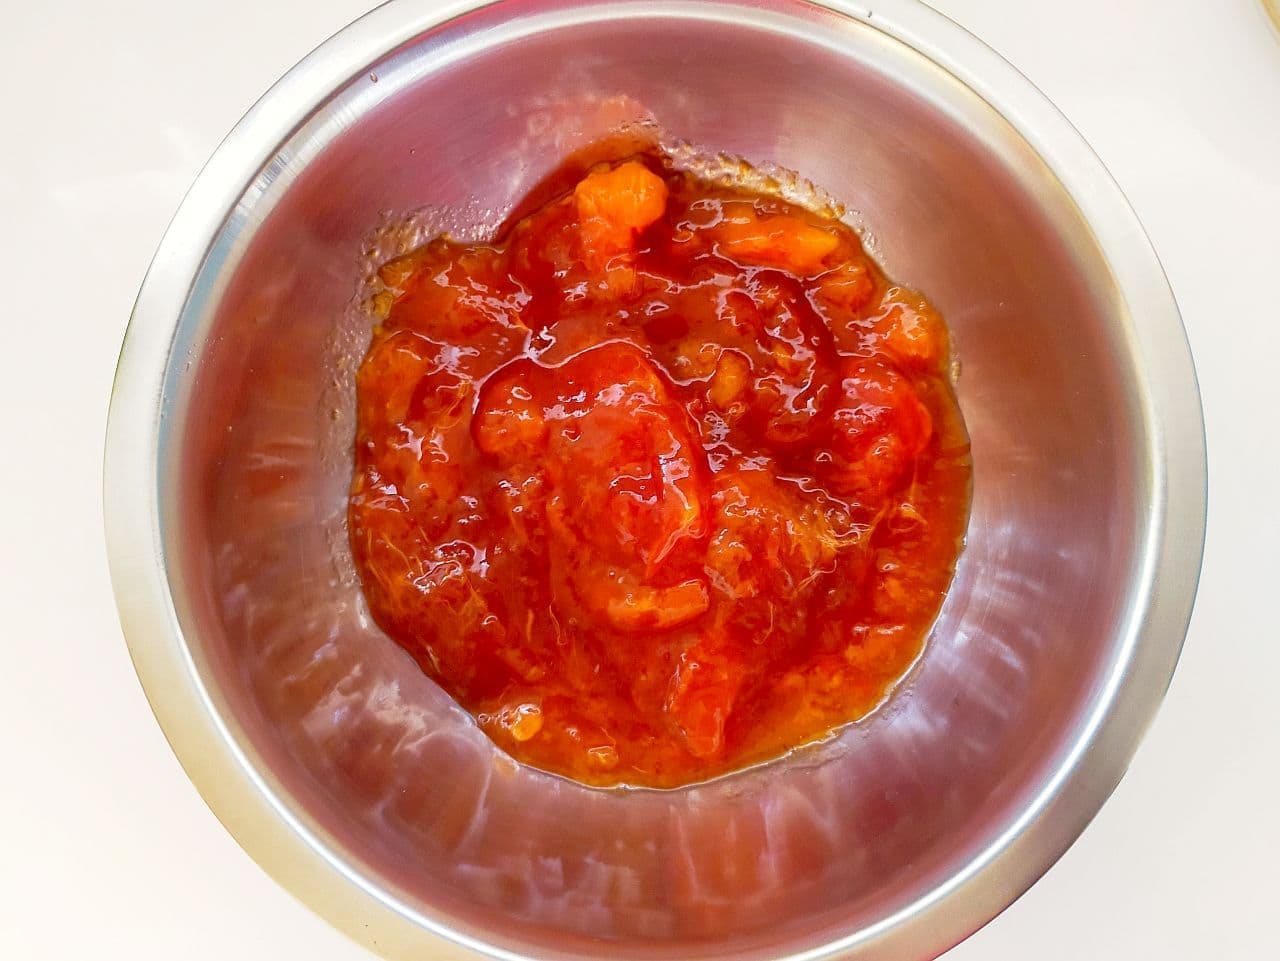 Recipe for super tasty "persimmon pudding" using overripe persimmons